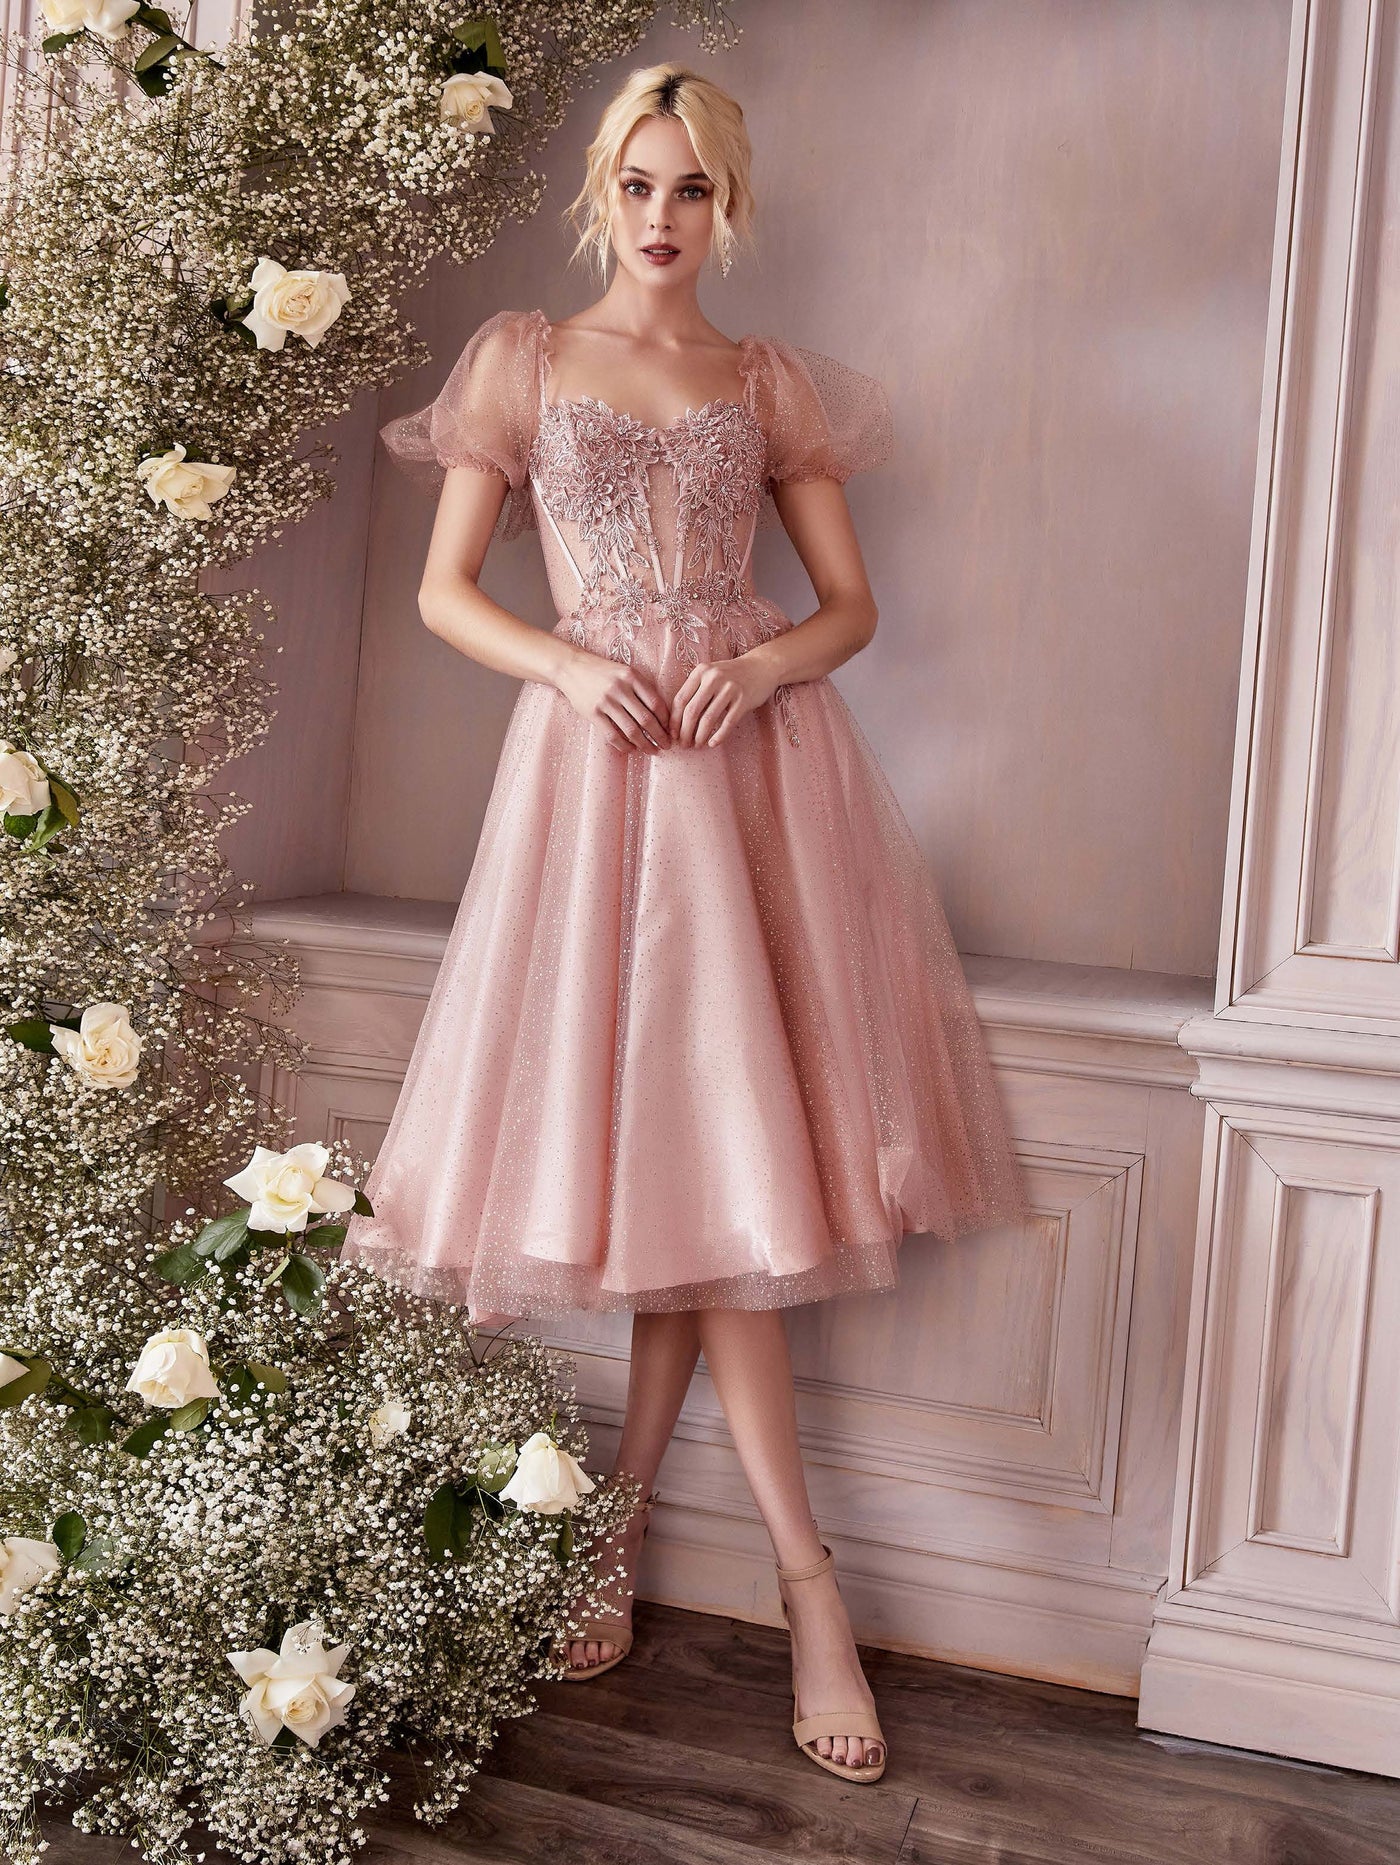 Cinderella Divine CD0187 PRE ORDER SHIPS 4-6 WEEKS B Chic Fashions Midi Dress Evening Gowns